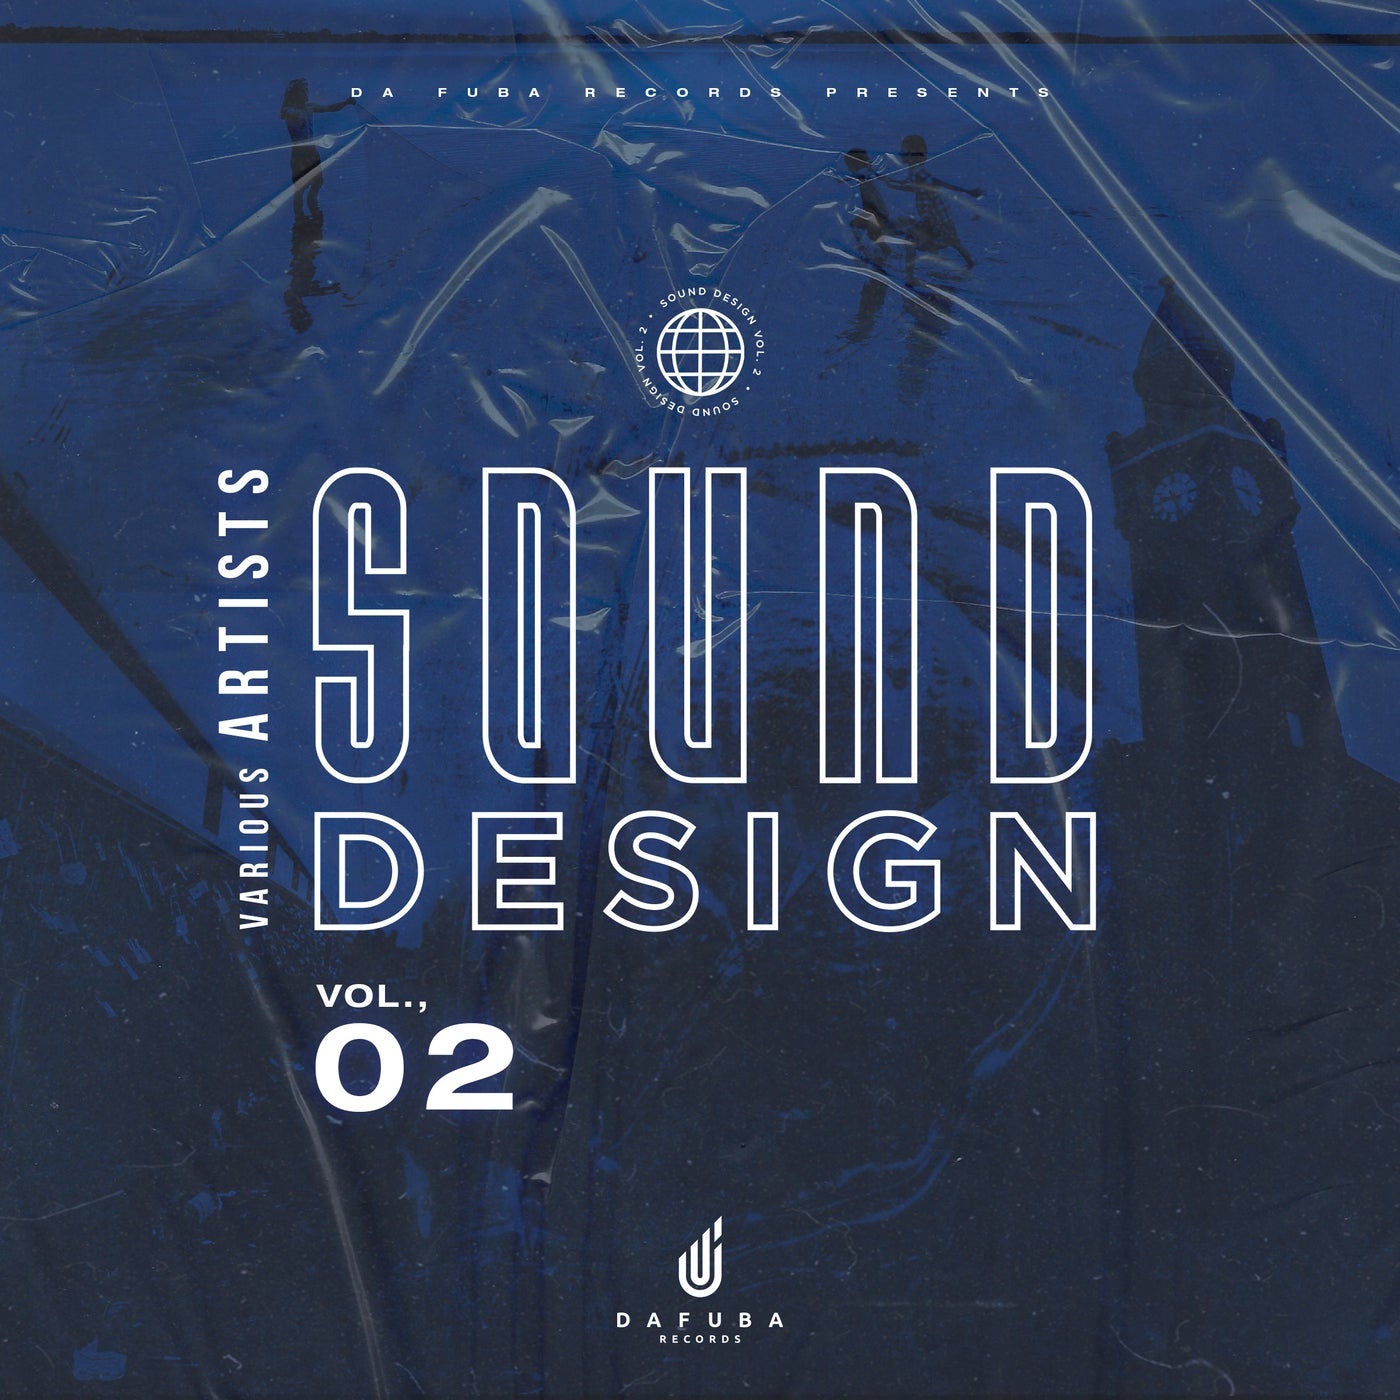 Sound Design, Vol 2